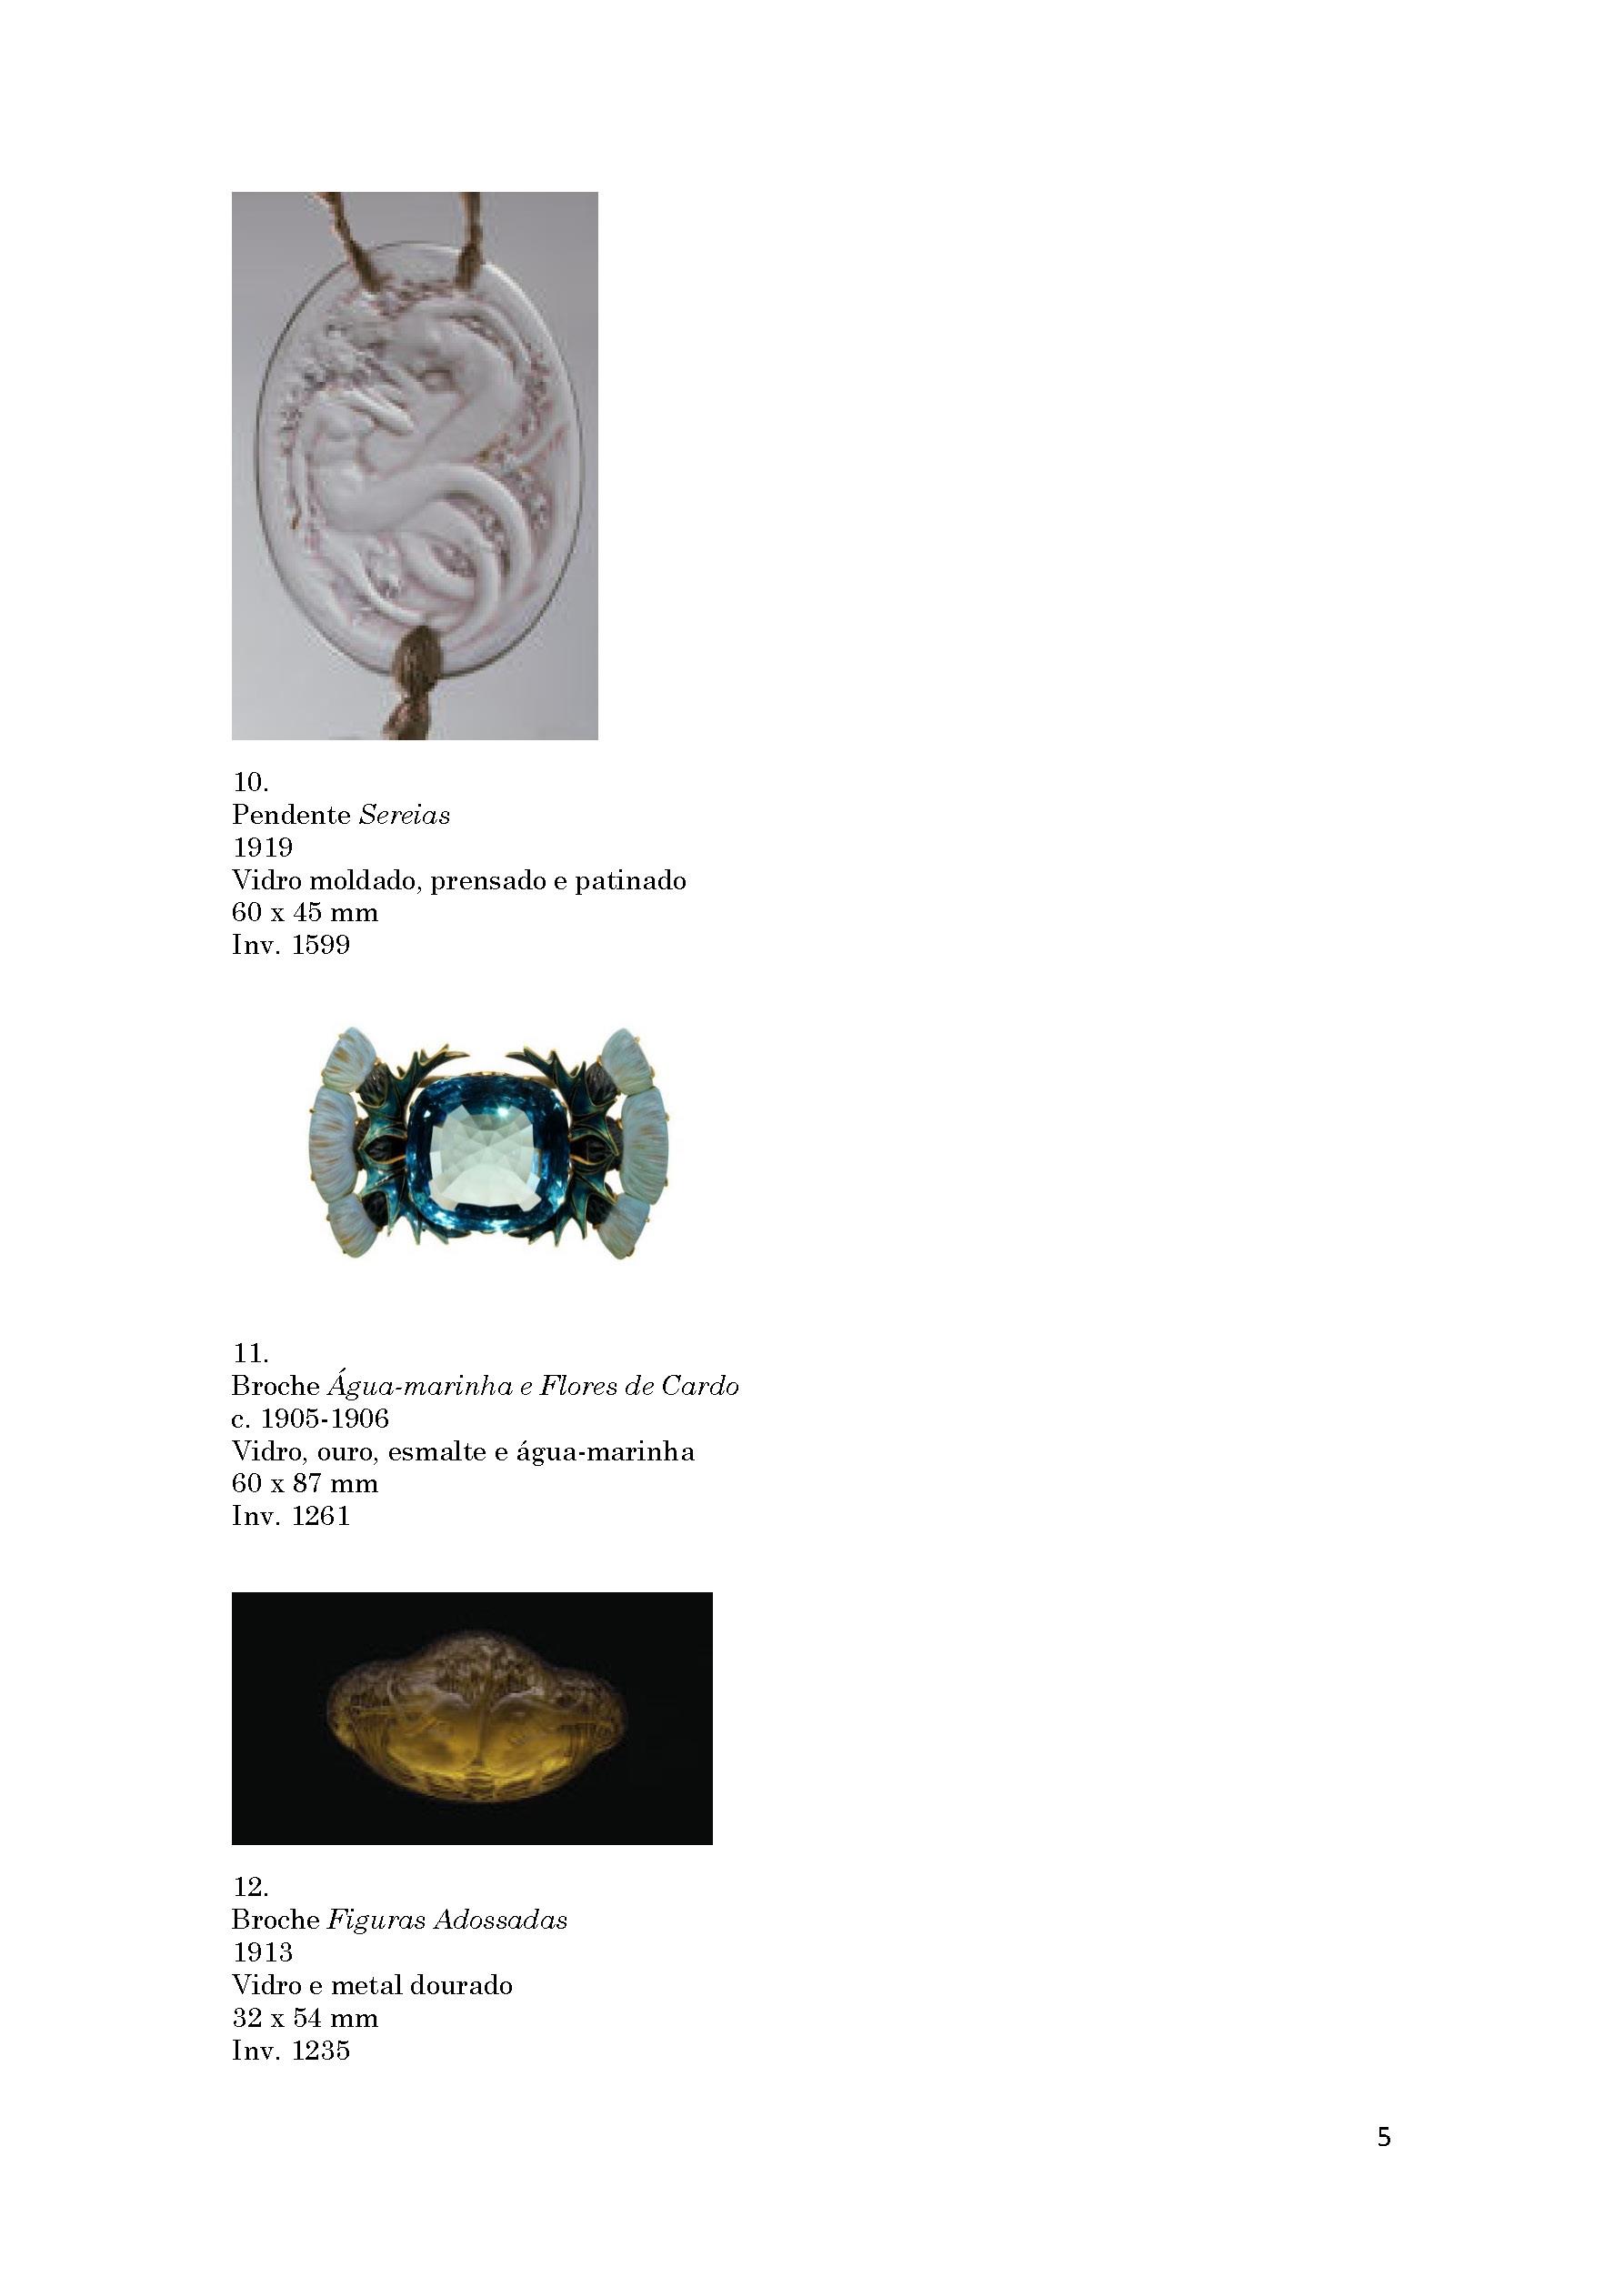 Lista_Vidros_Lalique_25.09.2020_1.5